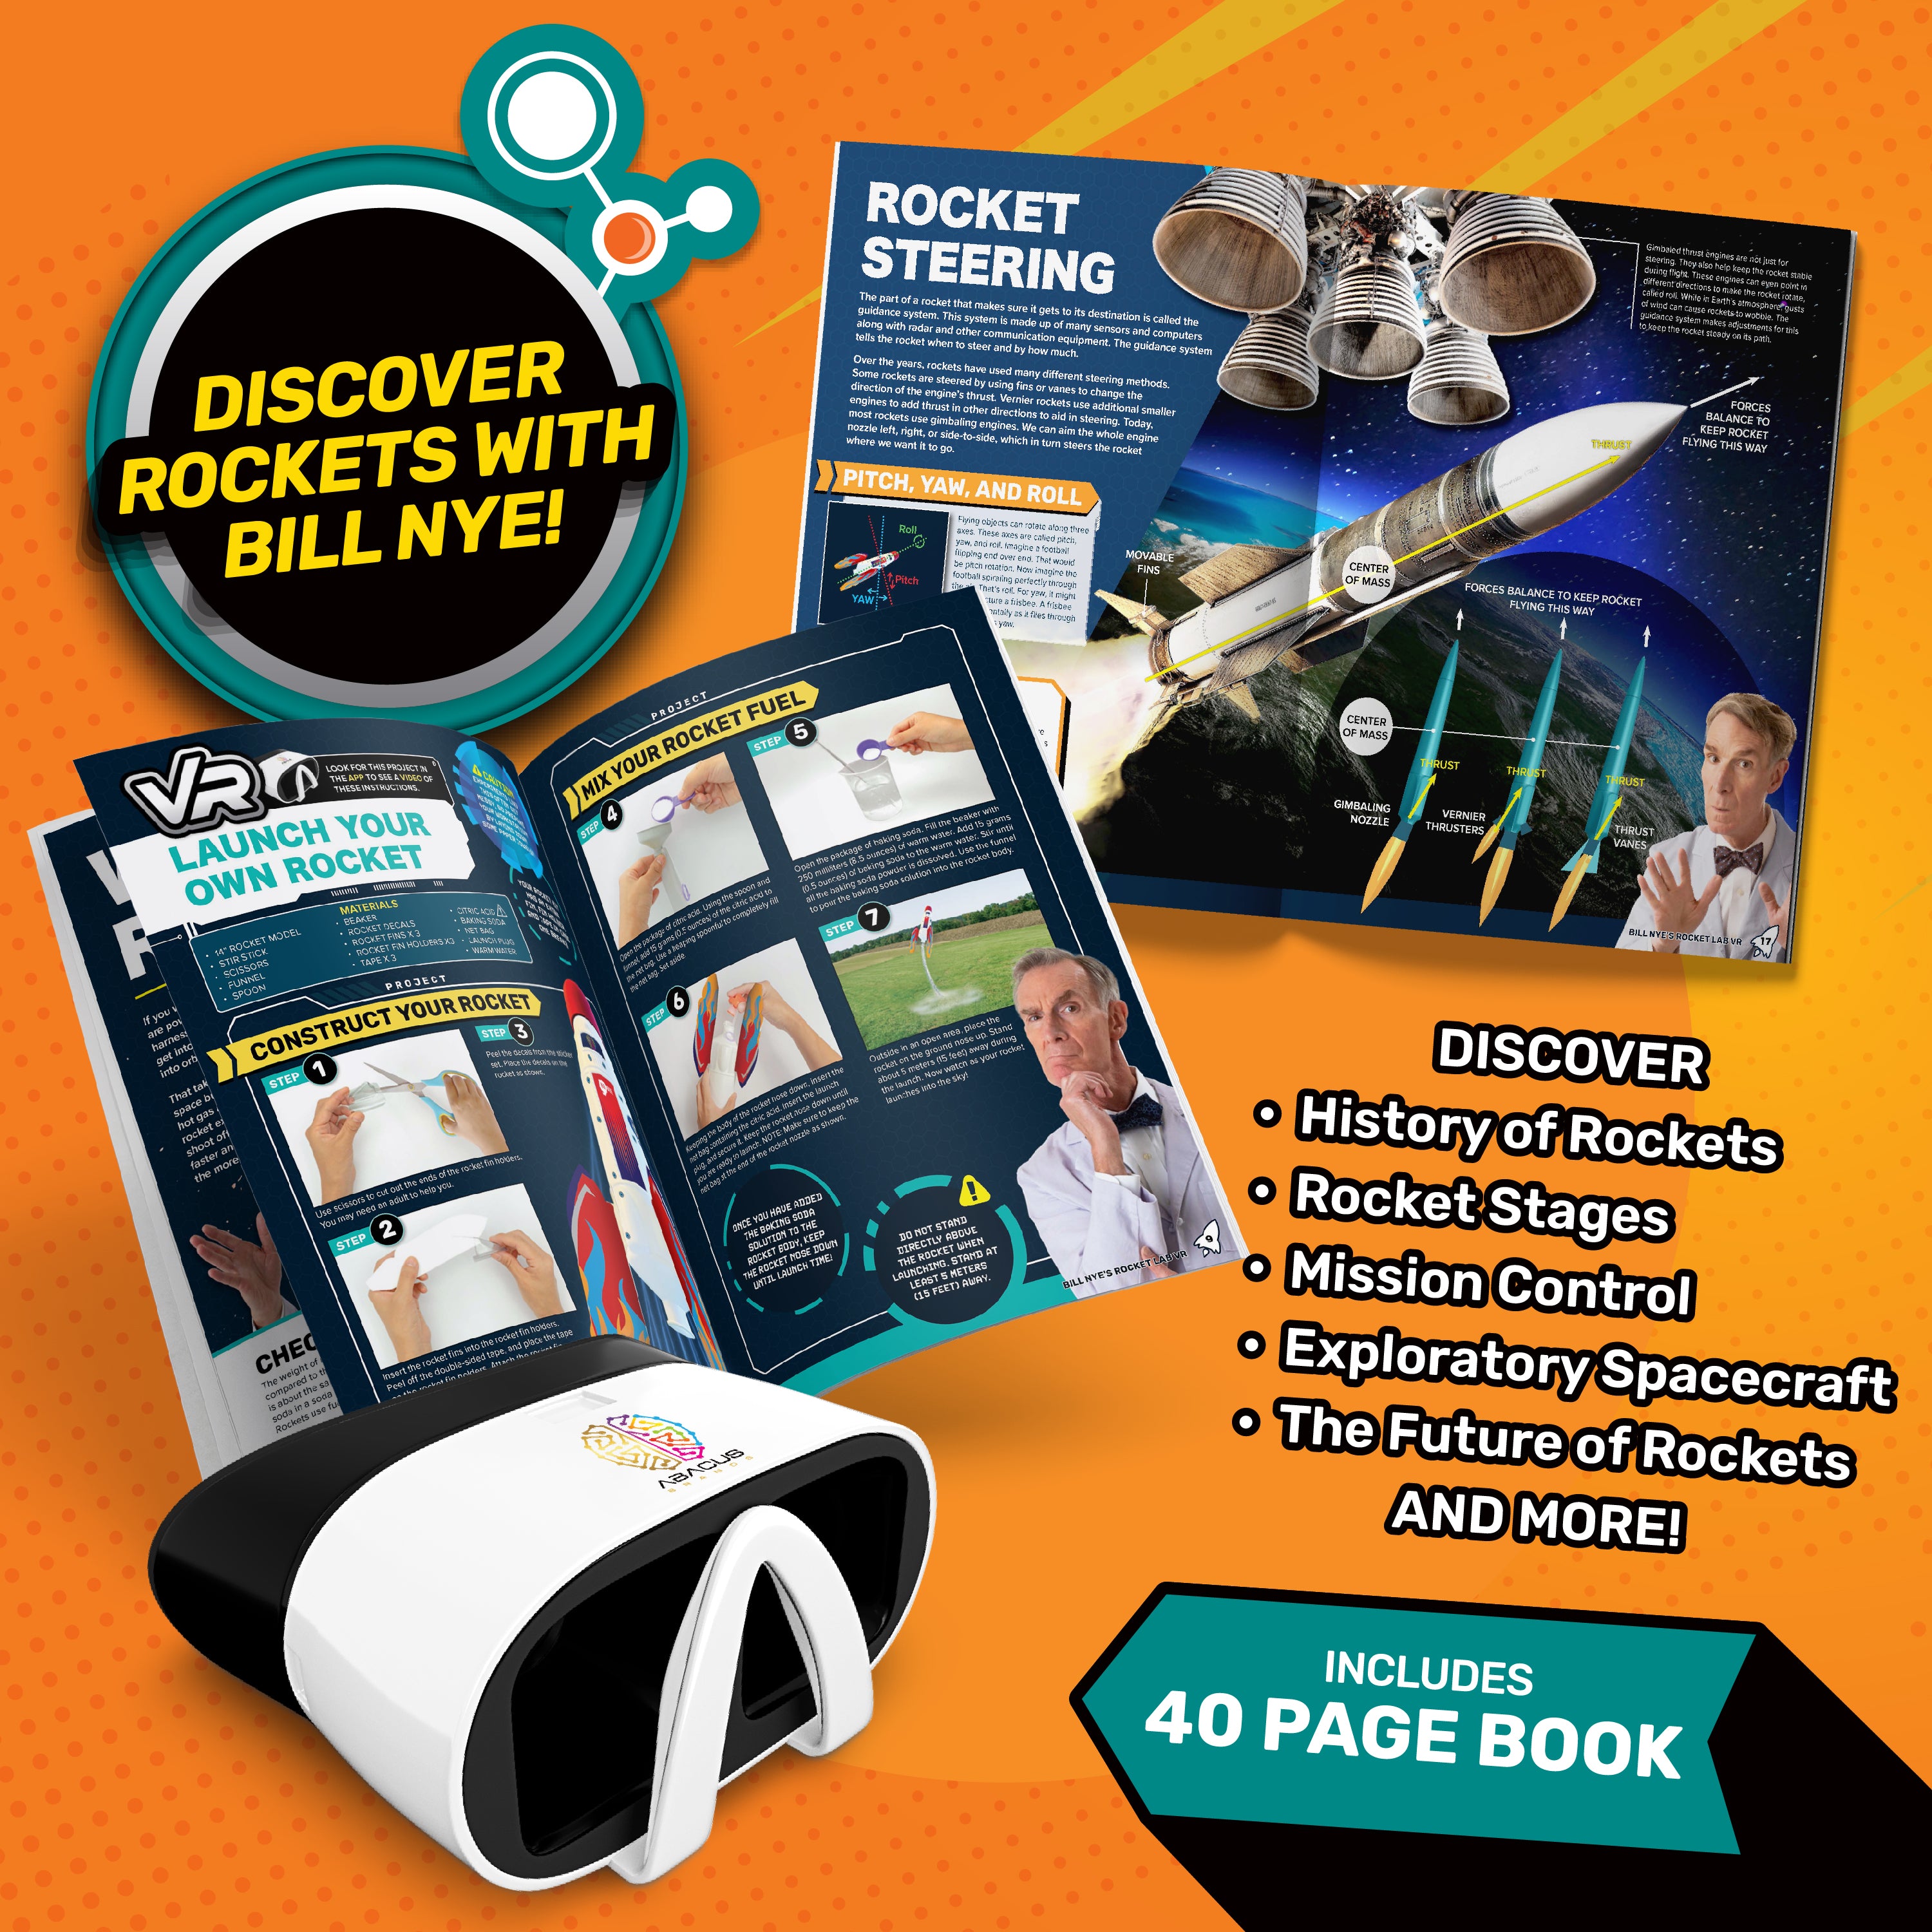 Bill Nye's Virtual Reality Rocket Science Kit - ROCKET LAB VR